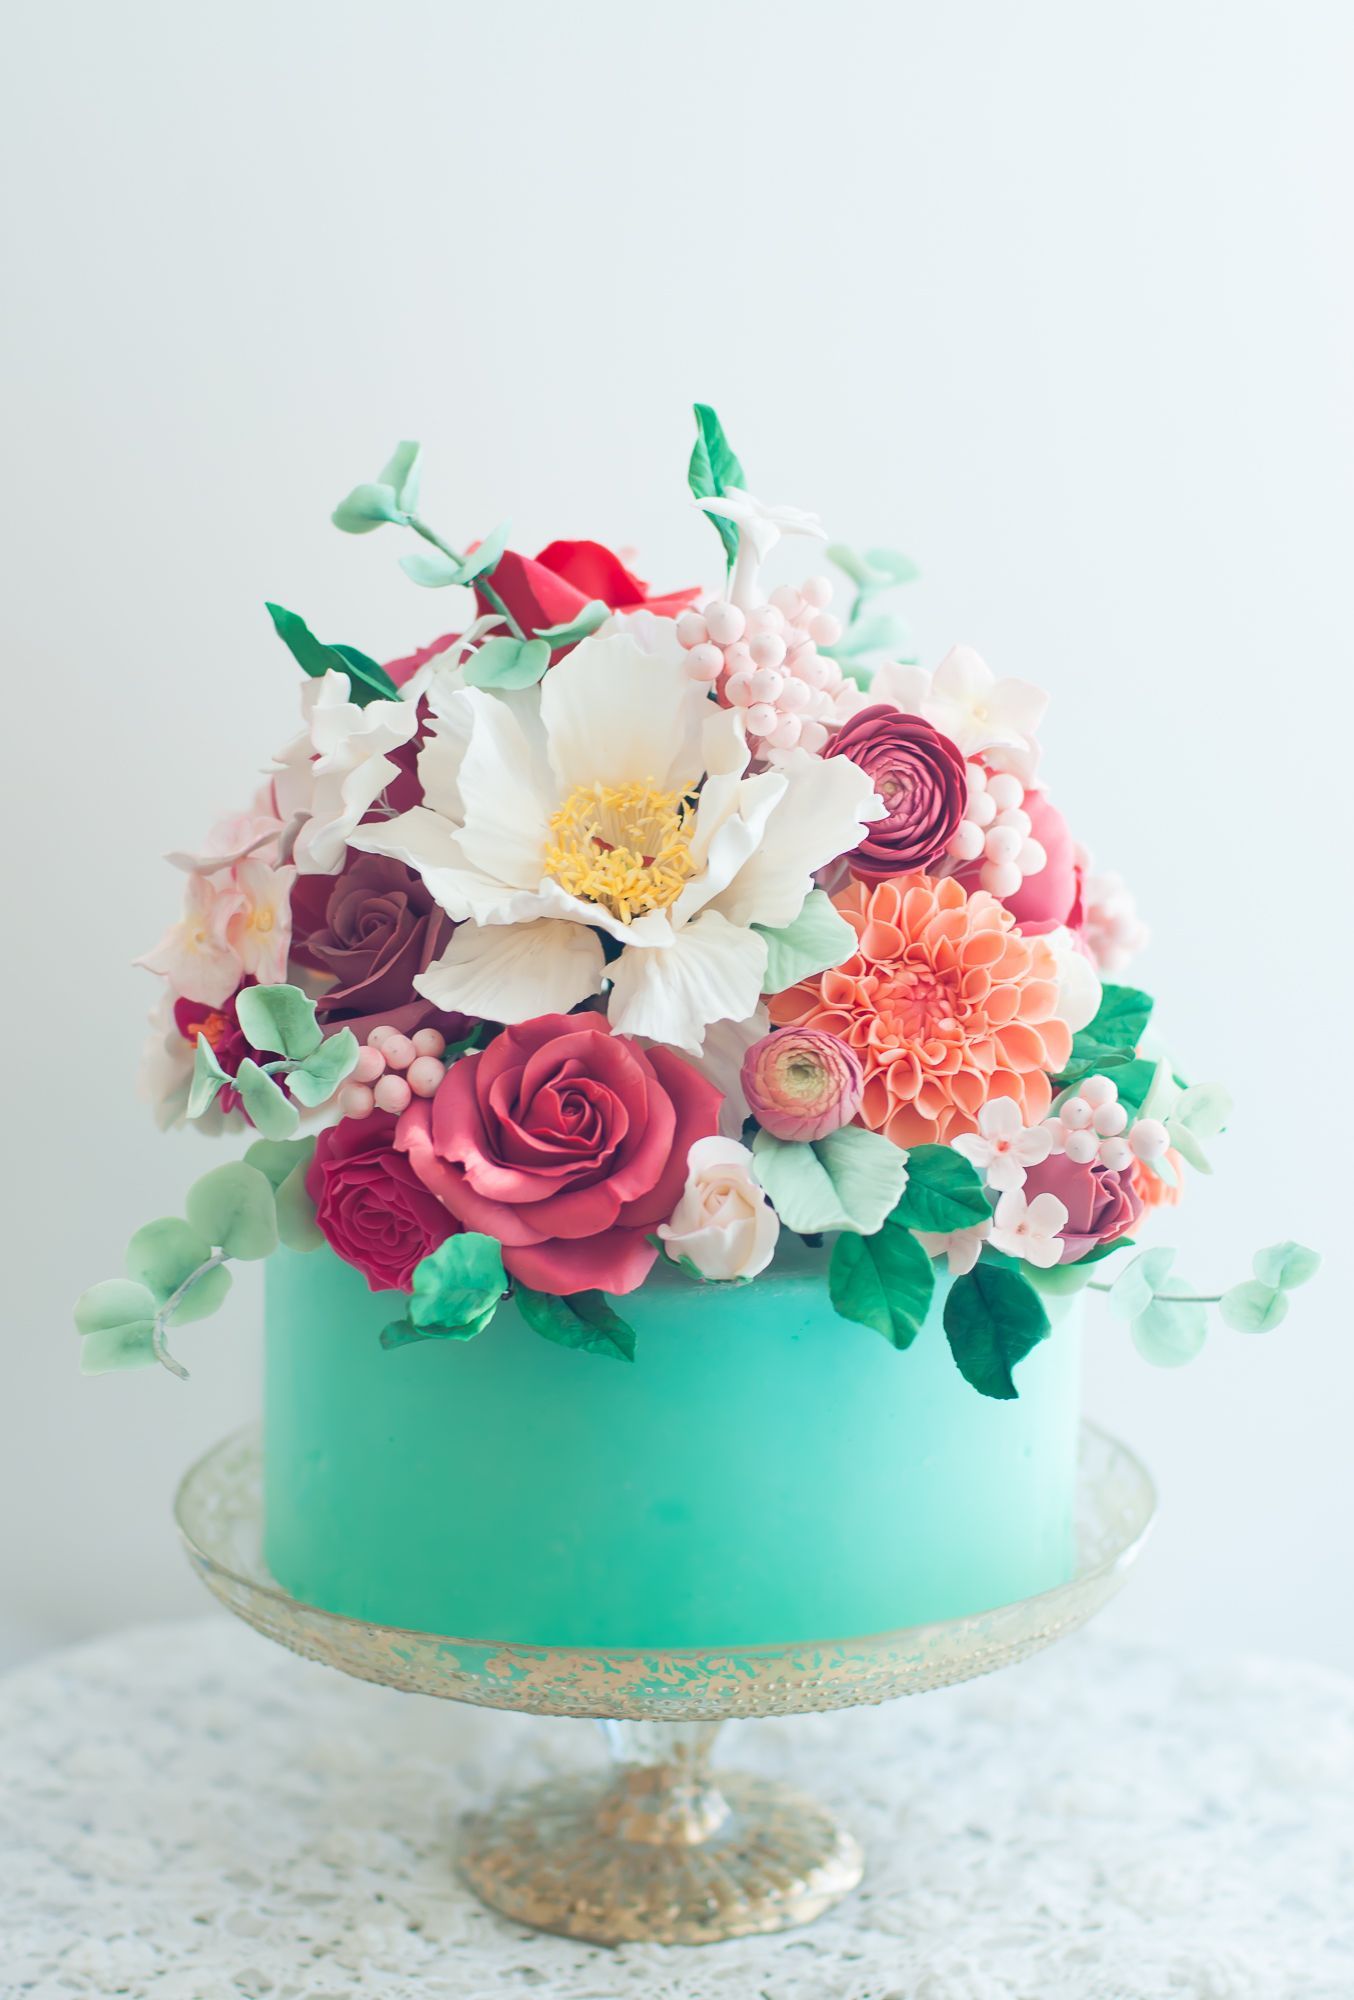 Lulu’s Sweet Secrets – Wedding and Celebration Cakes in Birmingham, Alabama